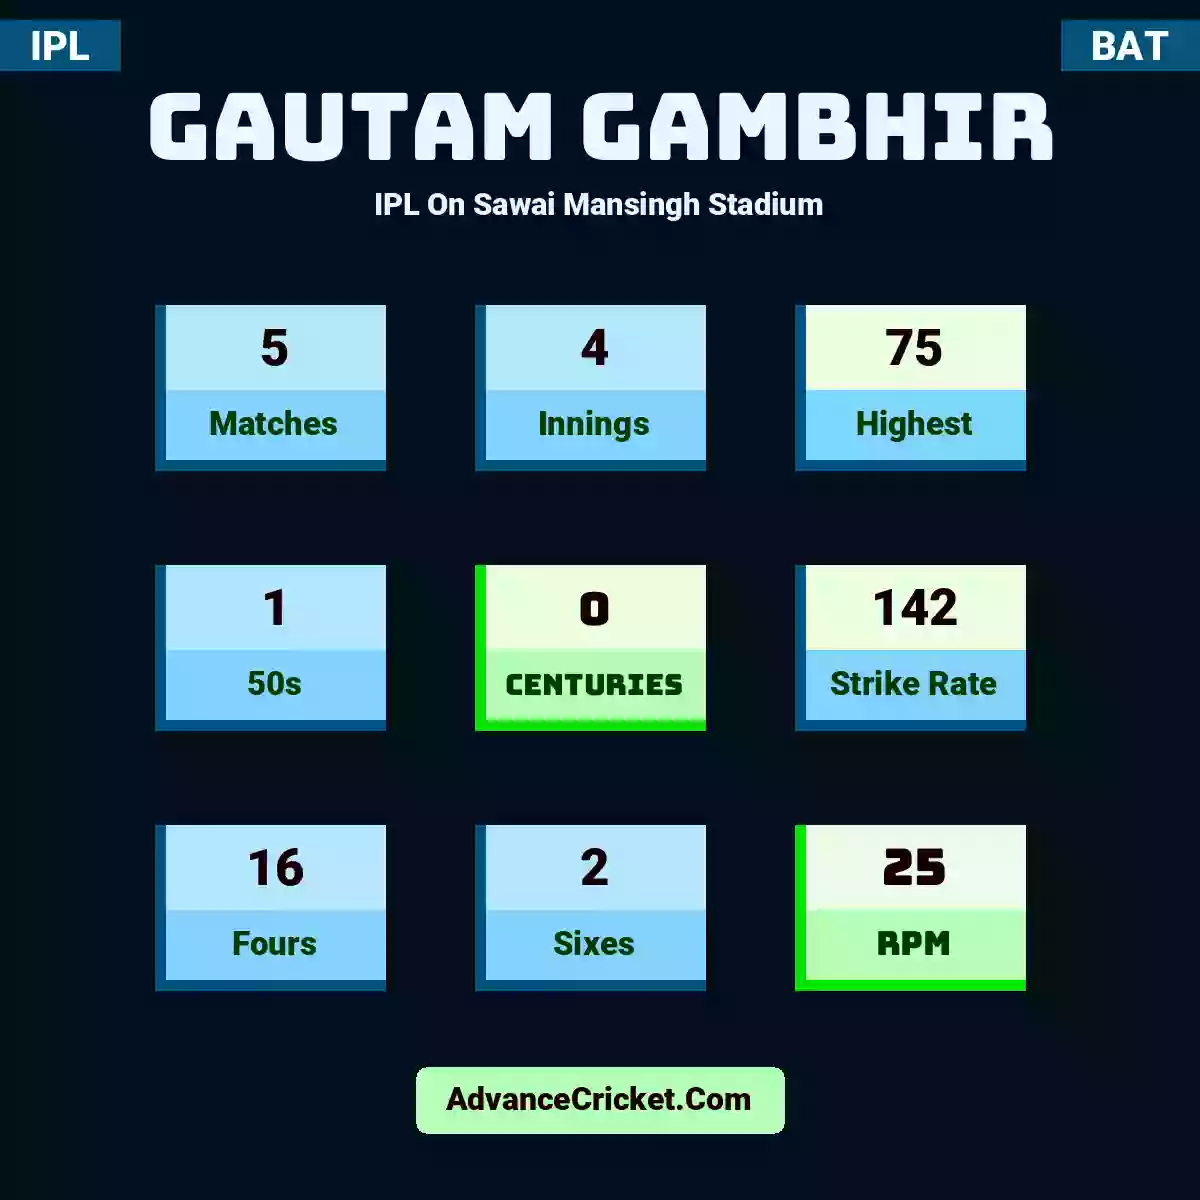 Gautam Gambhir IPL  On Sawai Mansingh Stadium, Gautam Gambhir played 5 matches, scored 75 runs as highest, 1 half-centuries, and 0 centuries, with a strike rate of 142. G.Gambhir hit 16 fours and 2 sixes, with an RPM of 25.